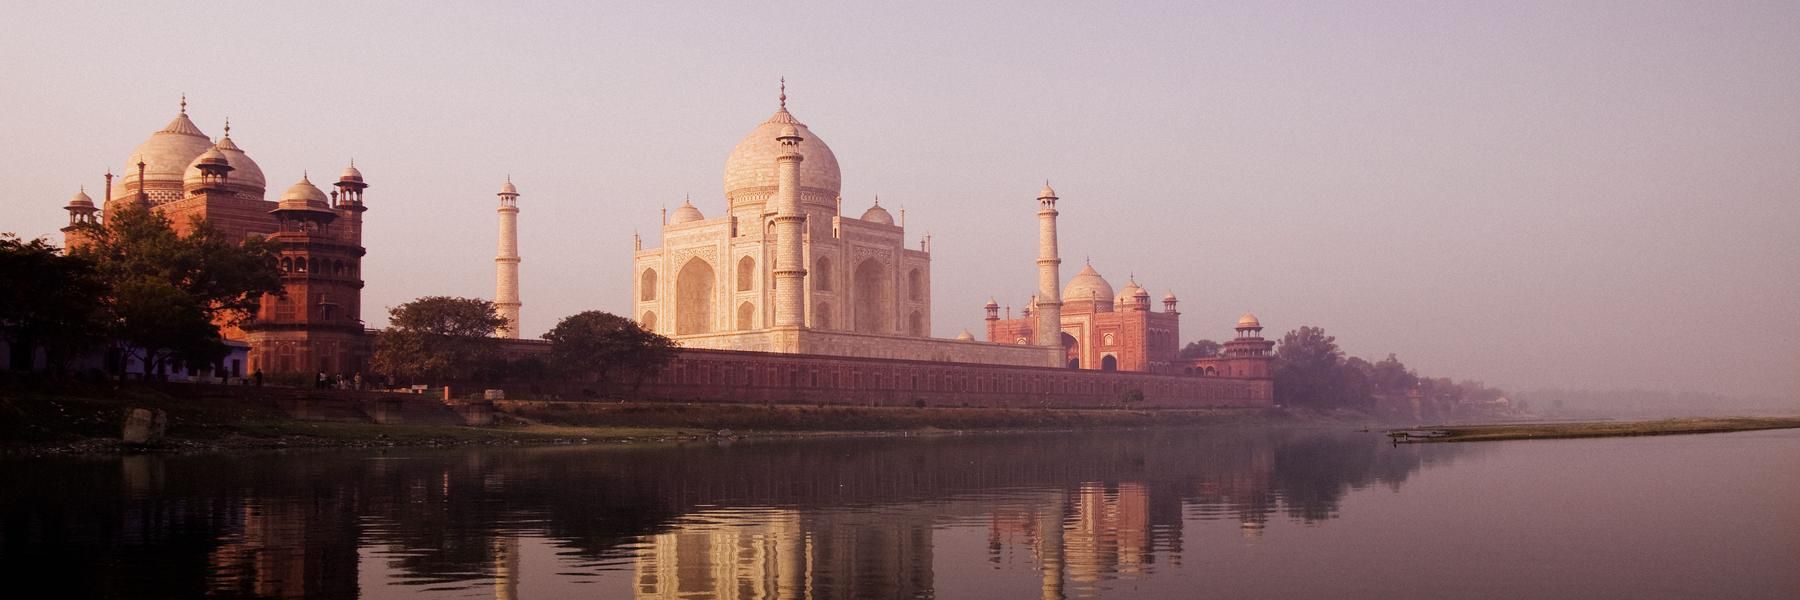 Remote Rajasthan, Tigers and the Taj Mahal